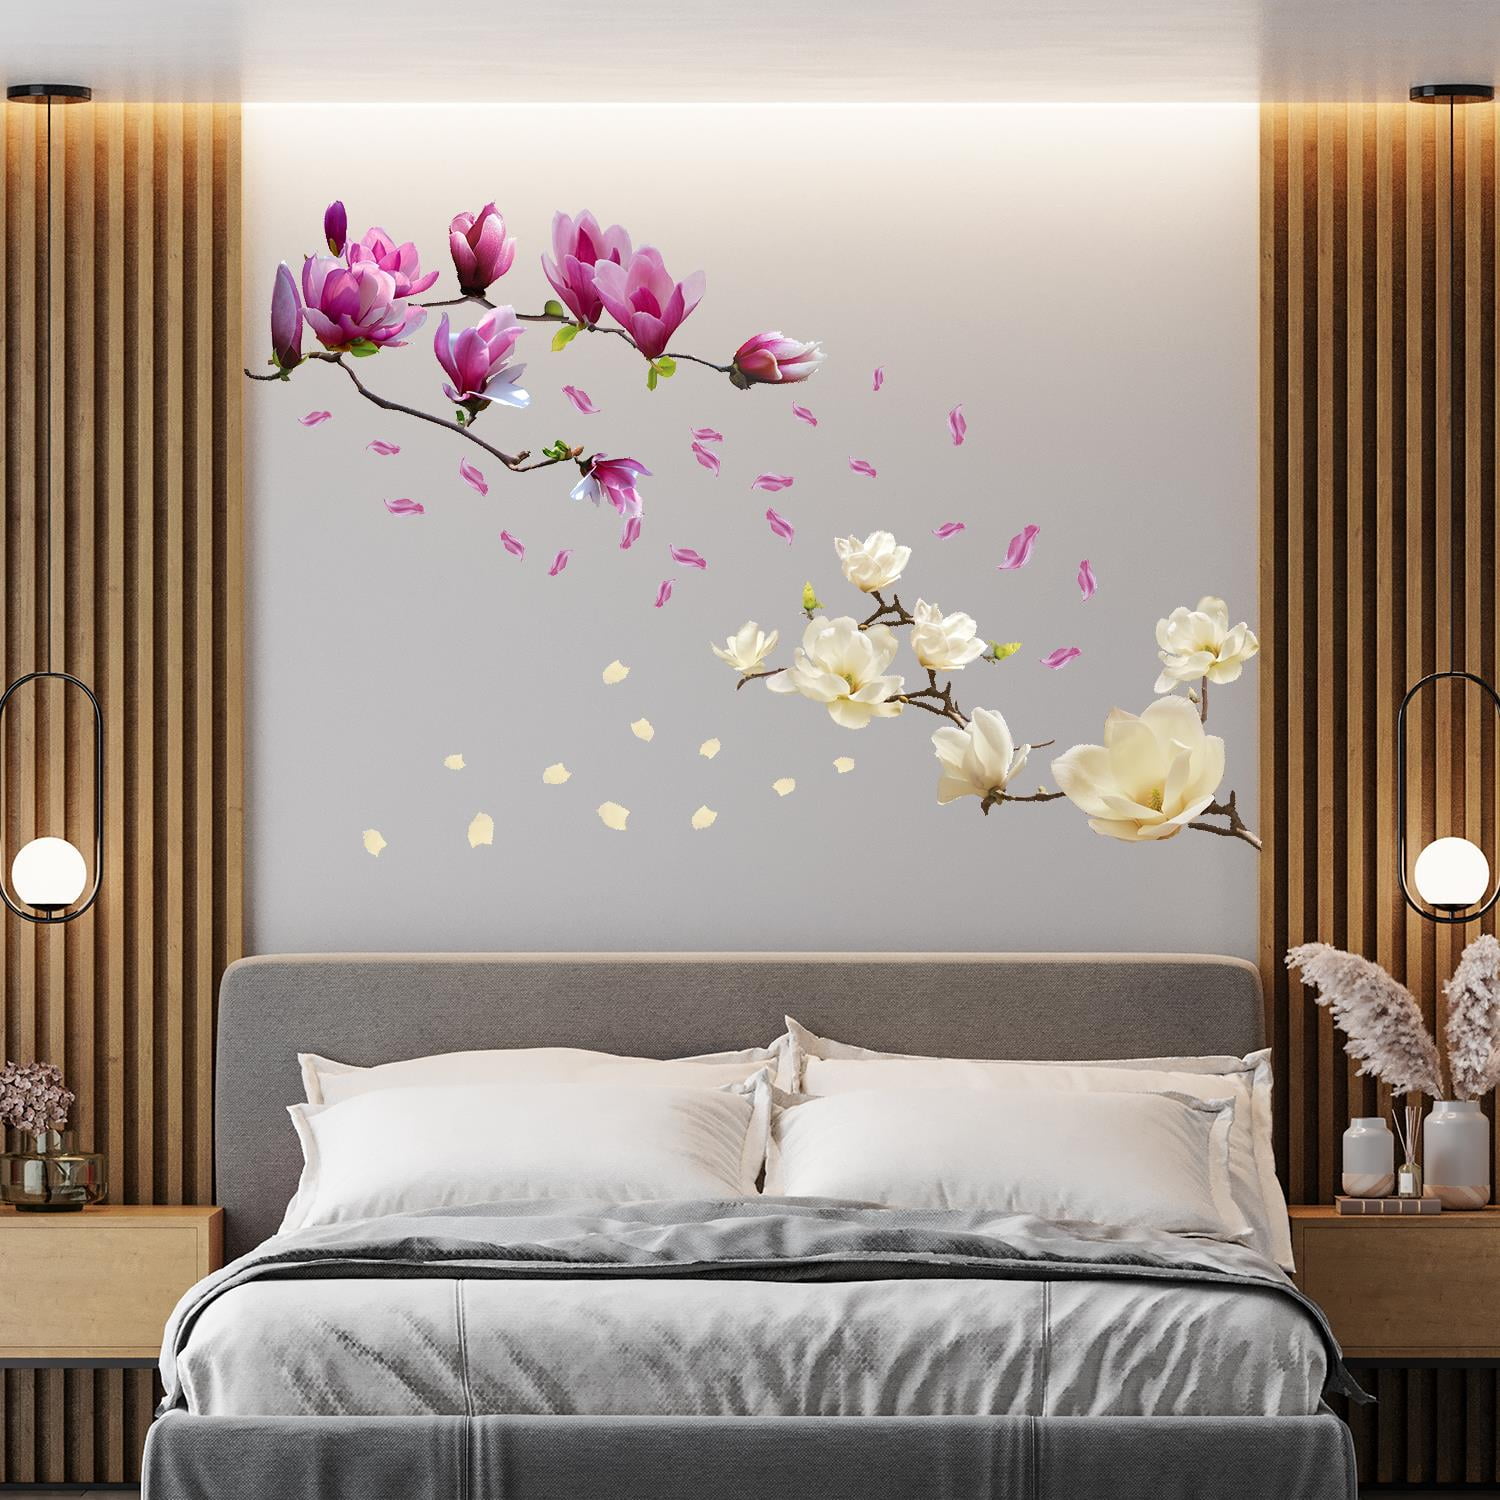 Walplus Wall Sticker Decal Wall Art Mirror Butterflies with Pink Blossom Flowers 